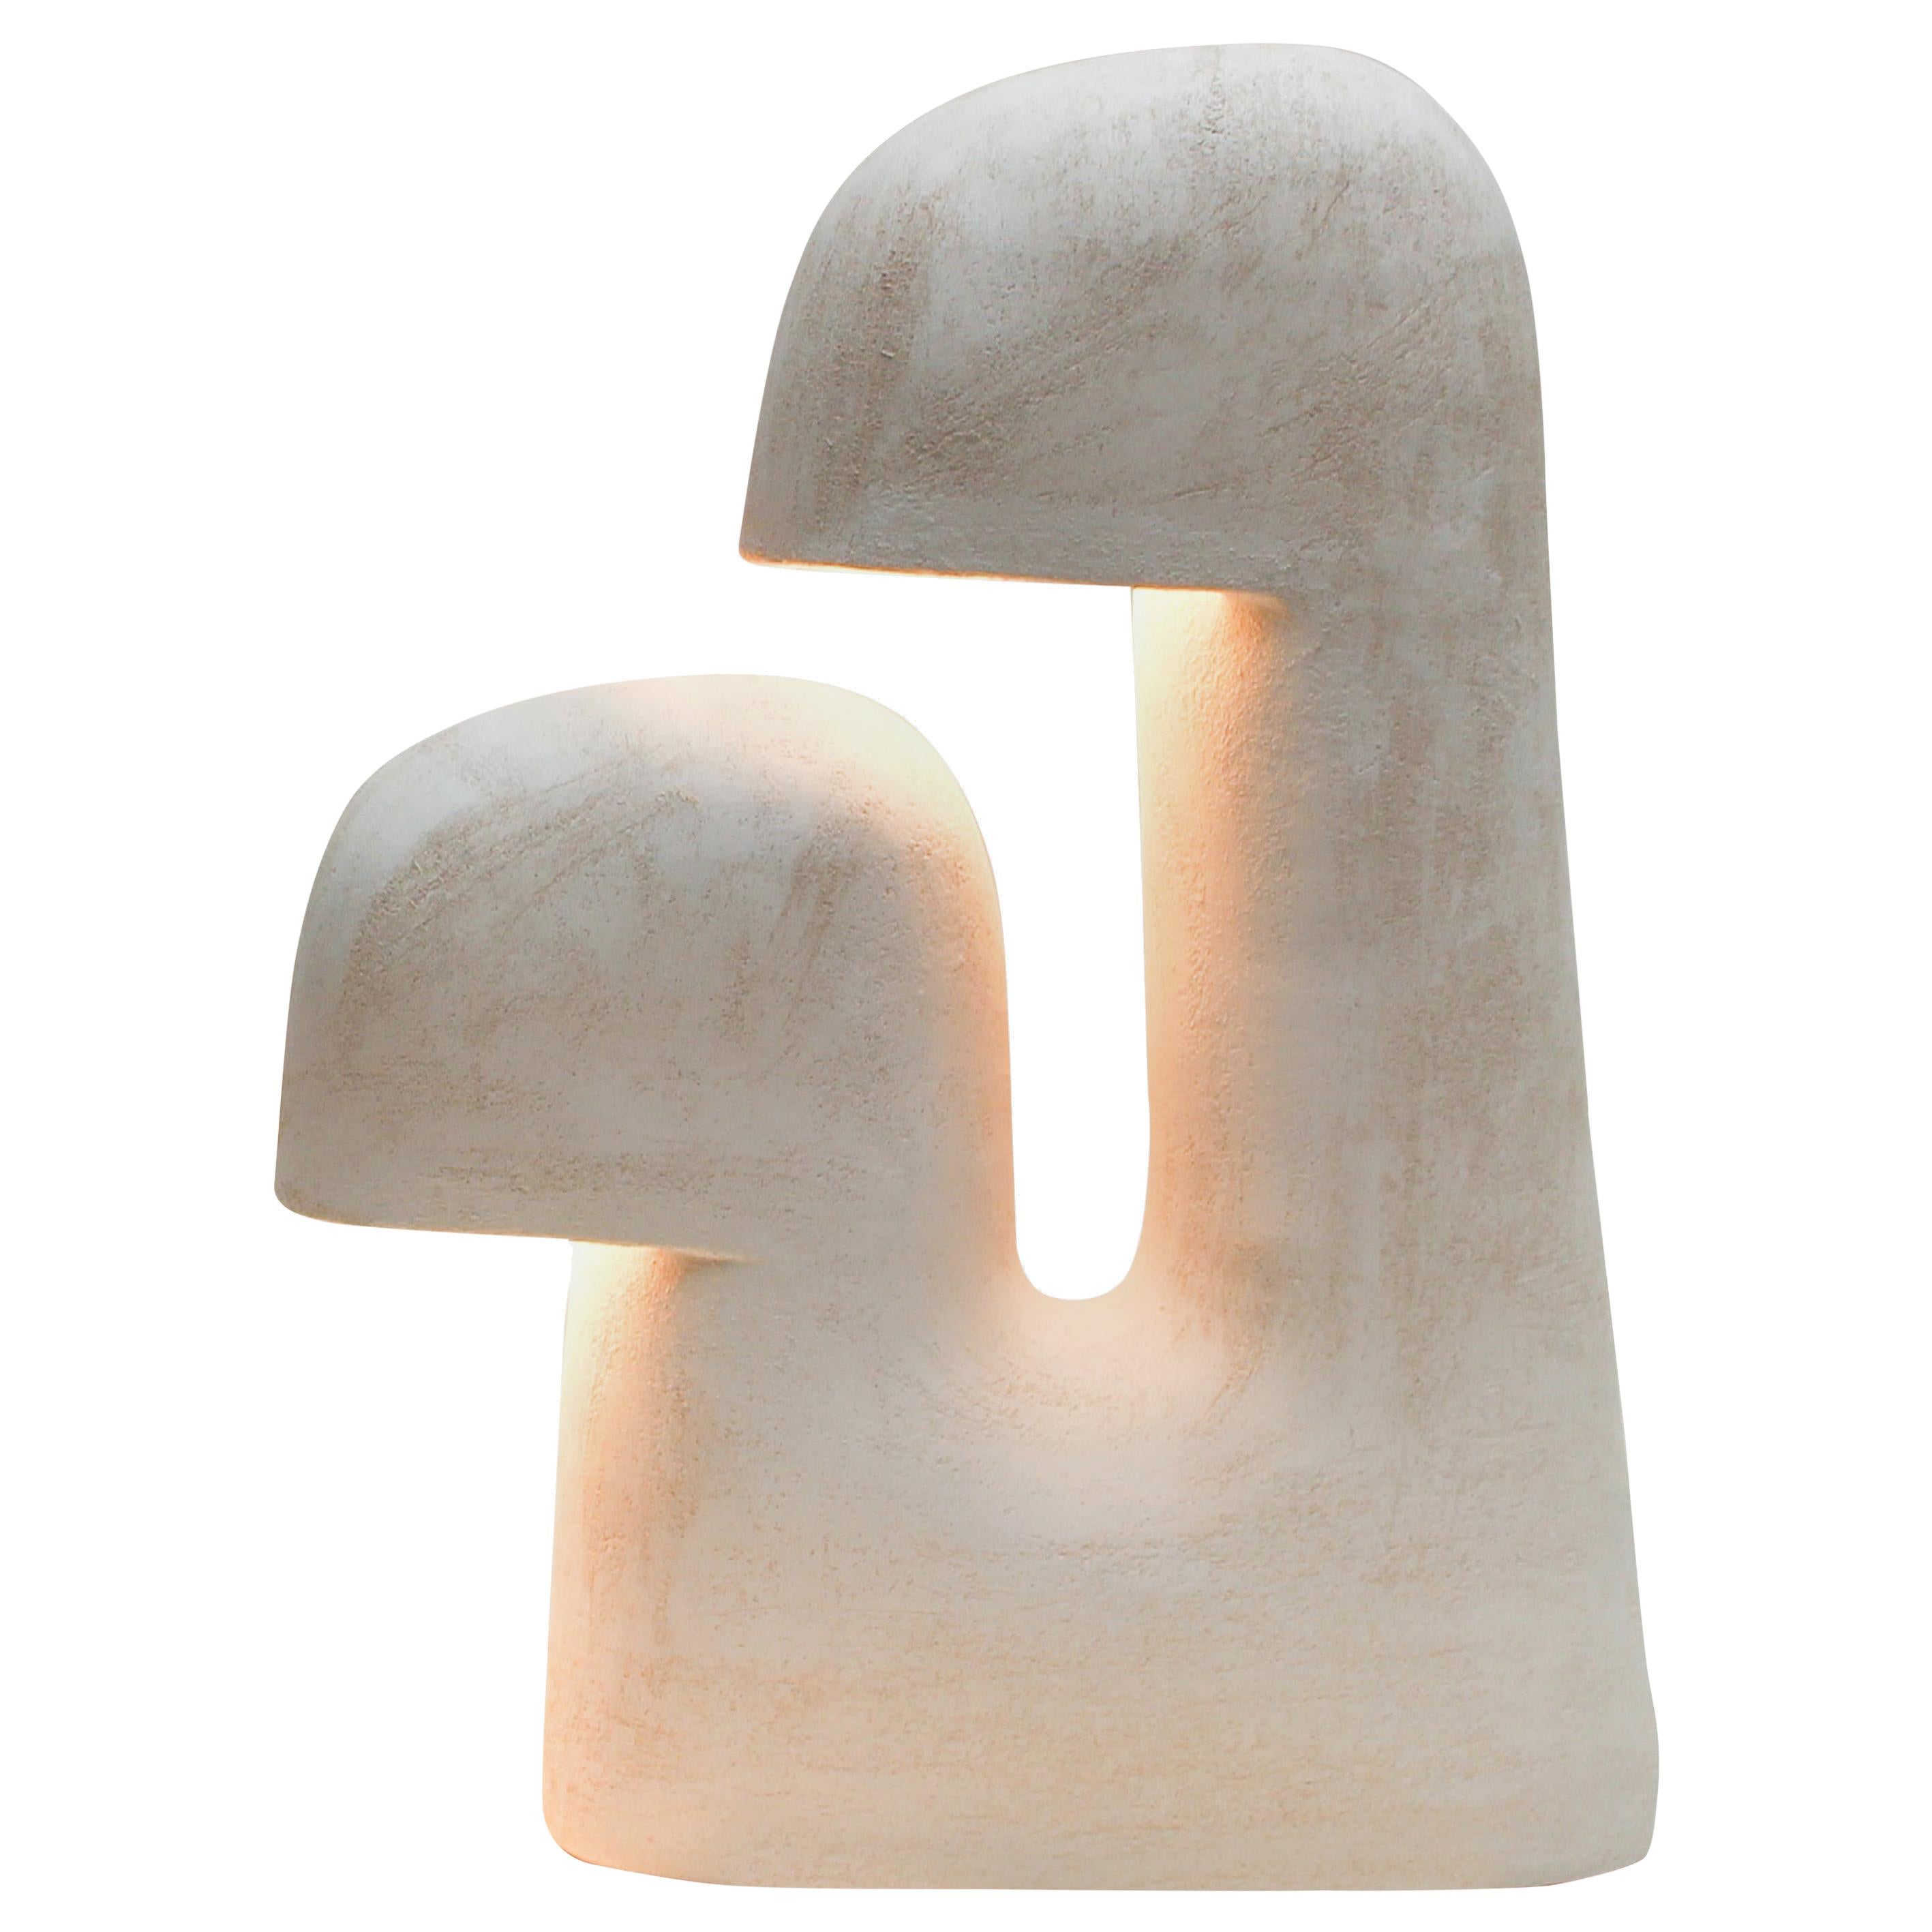 Édifice White Stoneware Table Lamp by Elisa Uberti